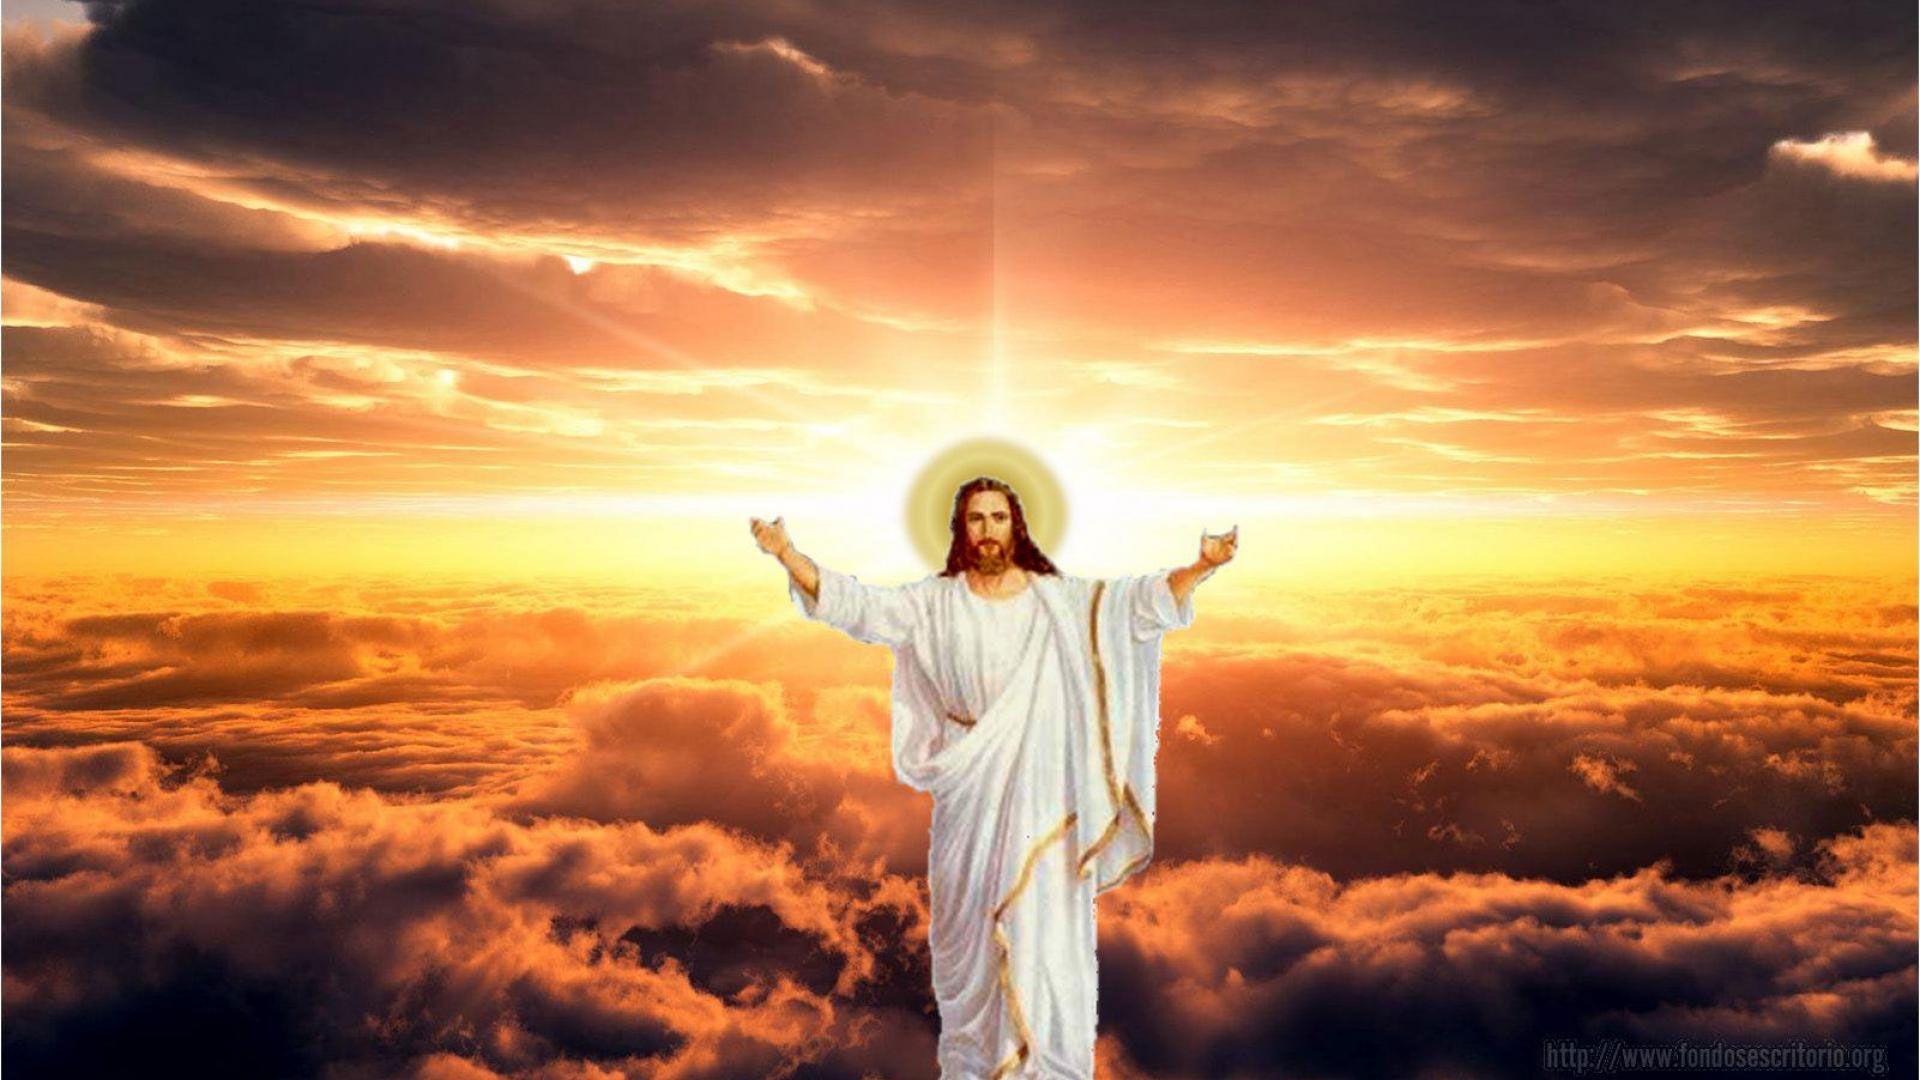 STUNNING ATTRACTIVE JESUS CHRIST 19 HD DESKTOP BACKGROUND WALLPAPER